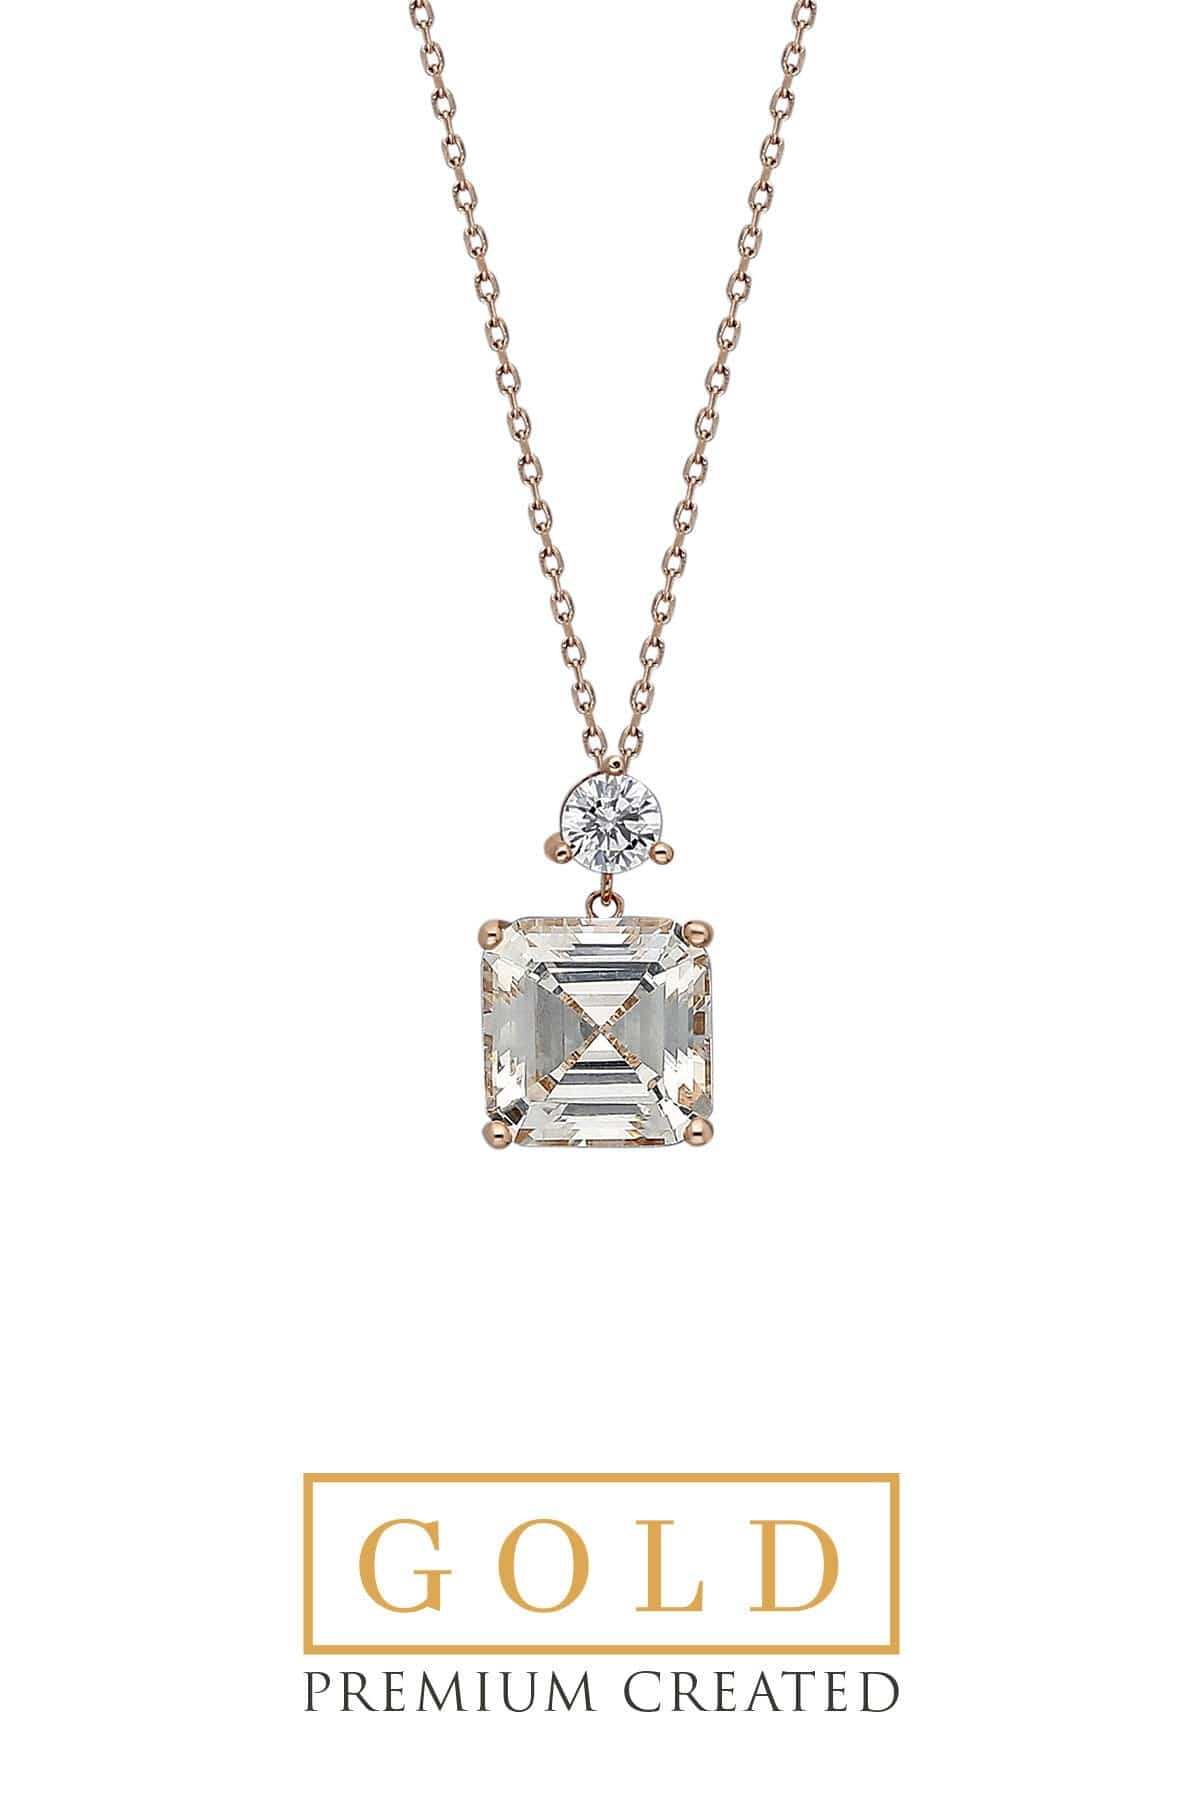 14 K Rose Gold Certified Premium Created Stone Ascher Cut Solitaire Necklace 42 Cm SoChic